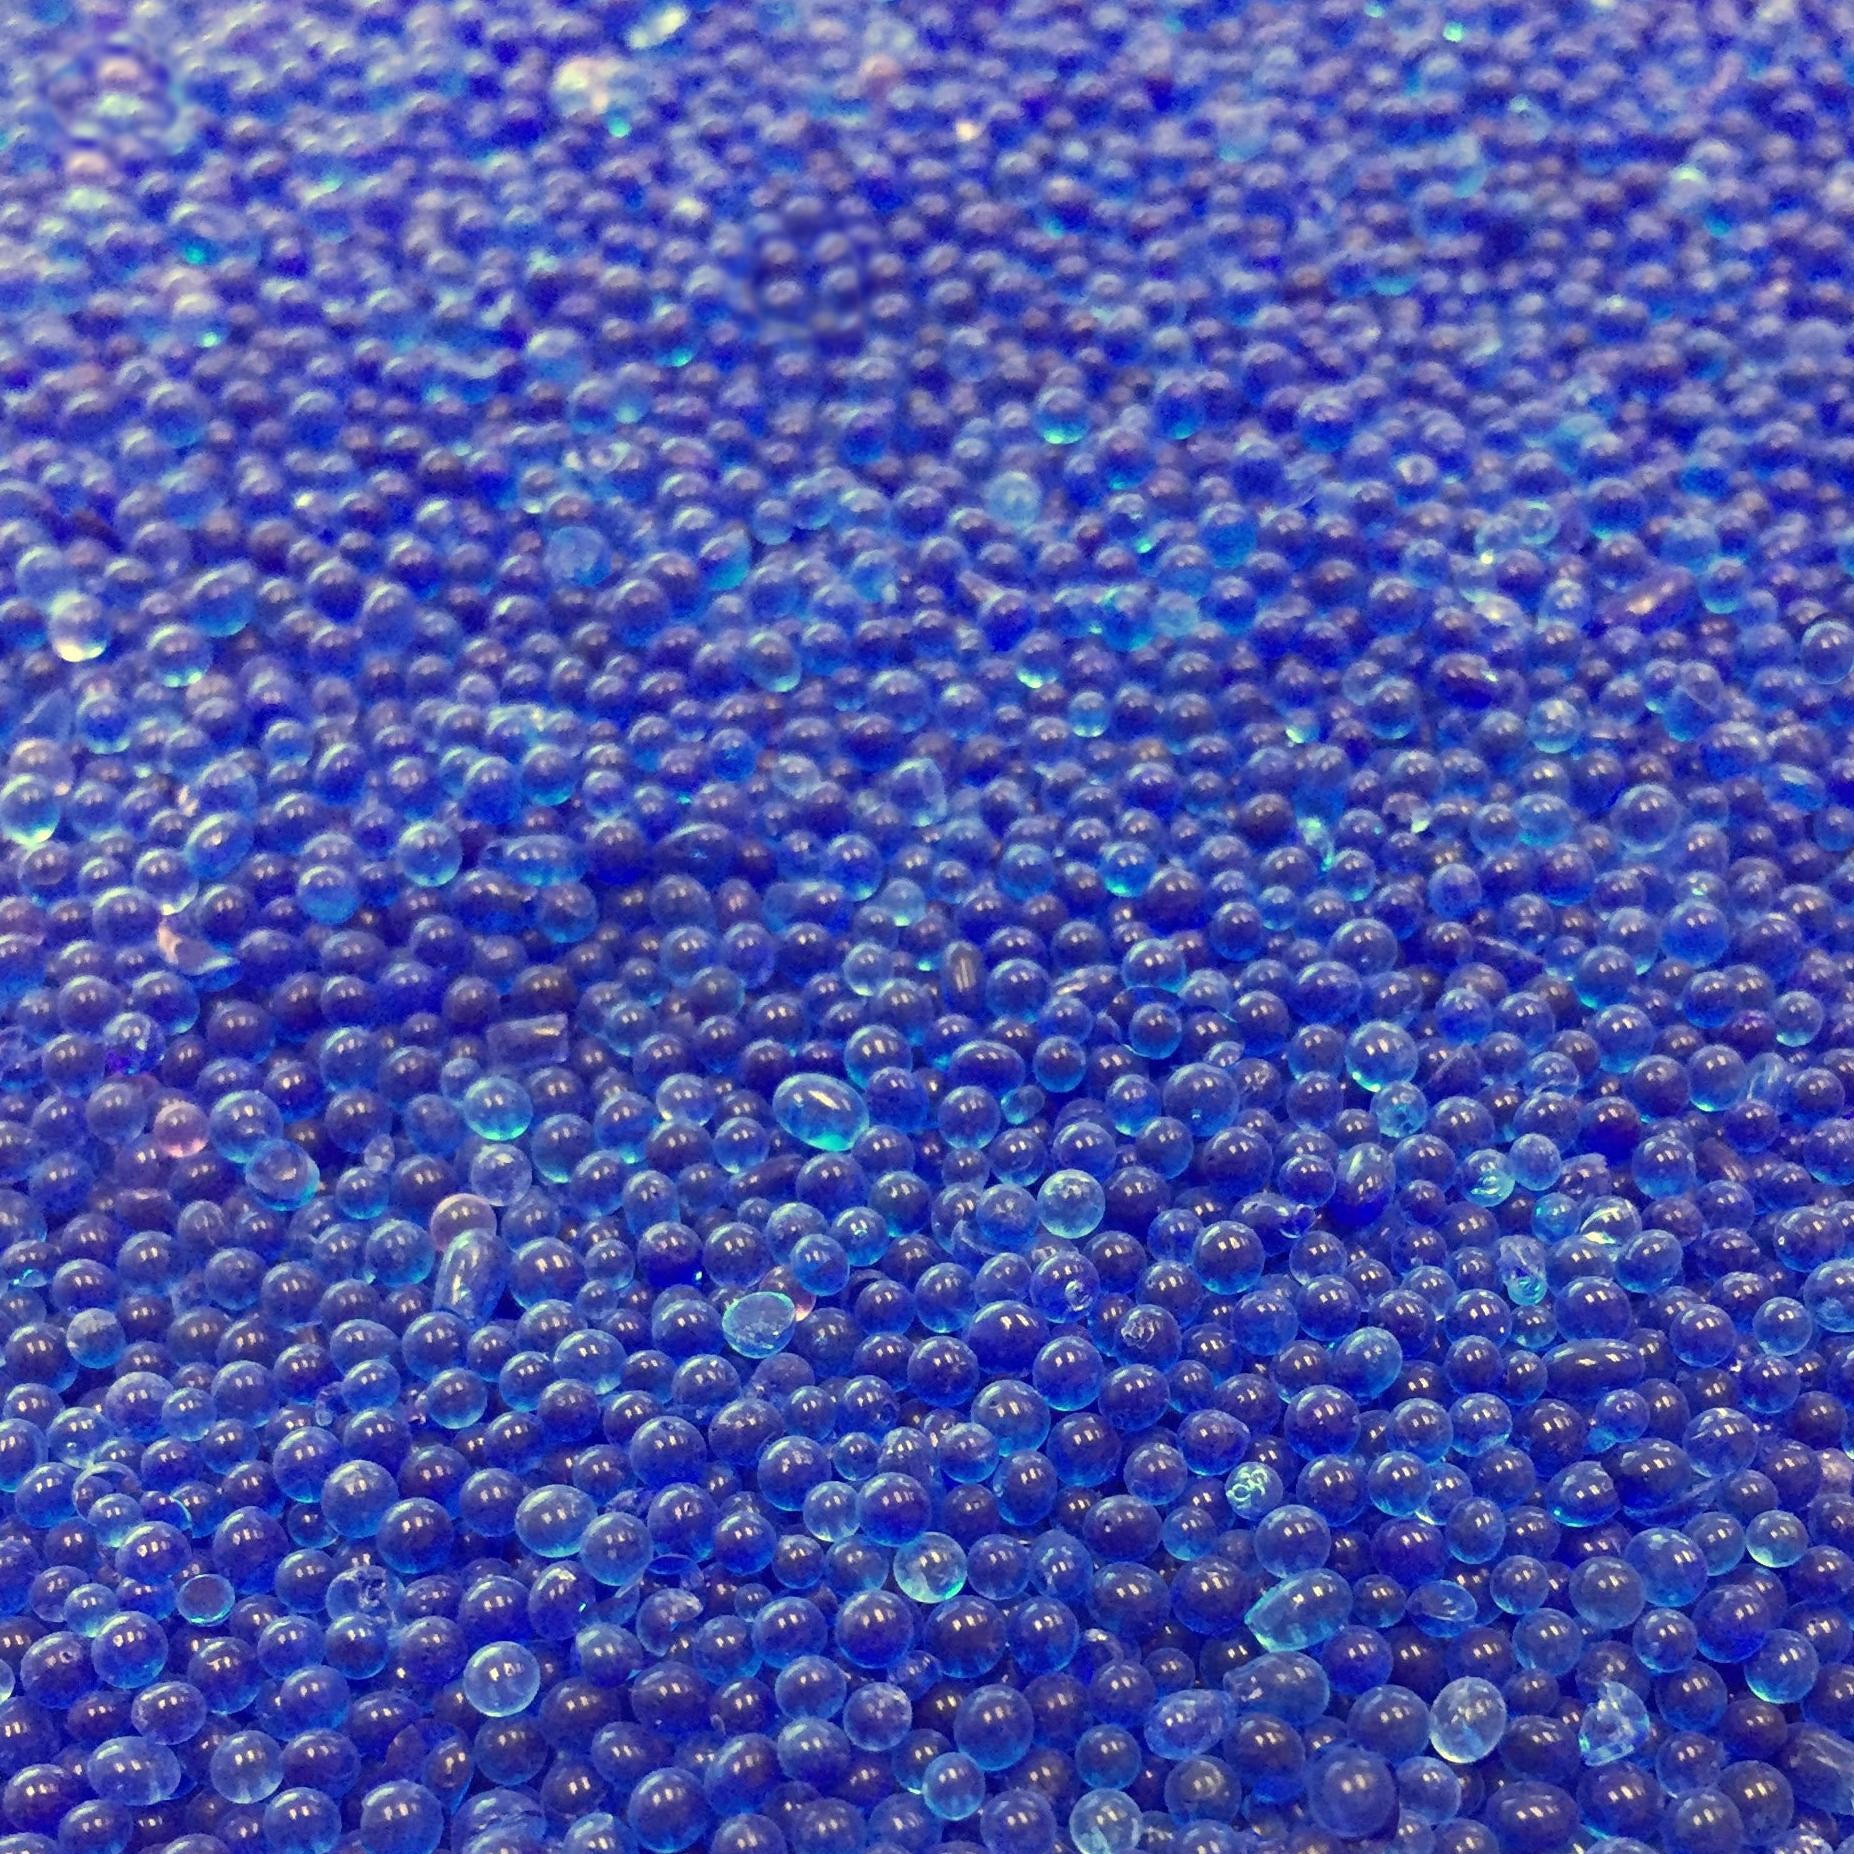 silica gel blue, blue silica gel, silica gel blue beads, silica